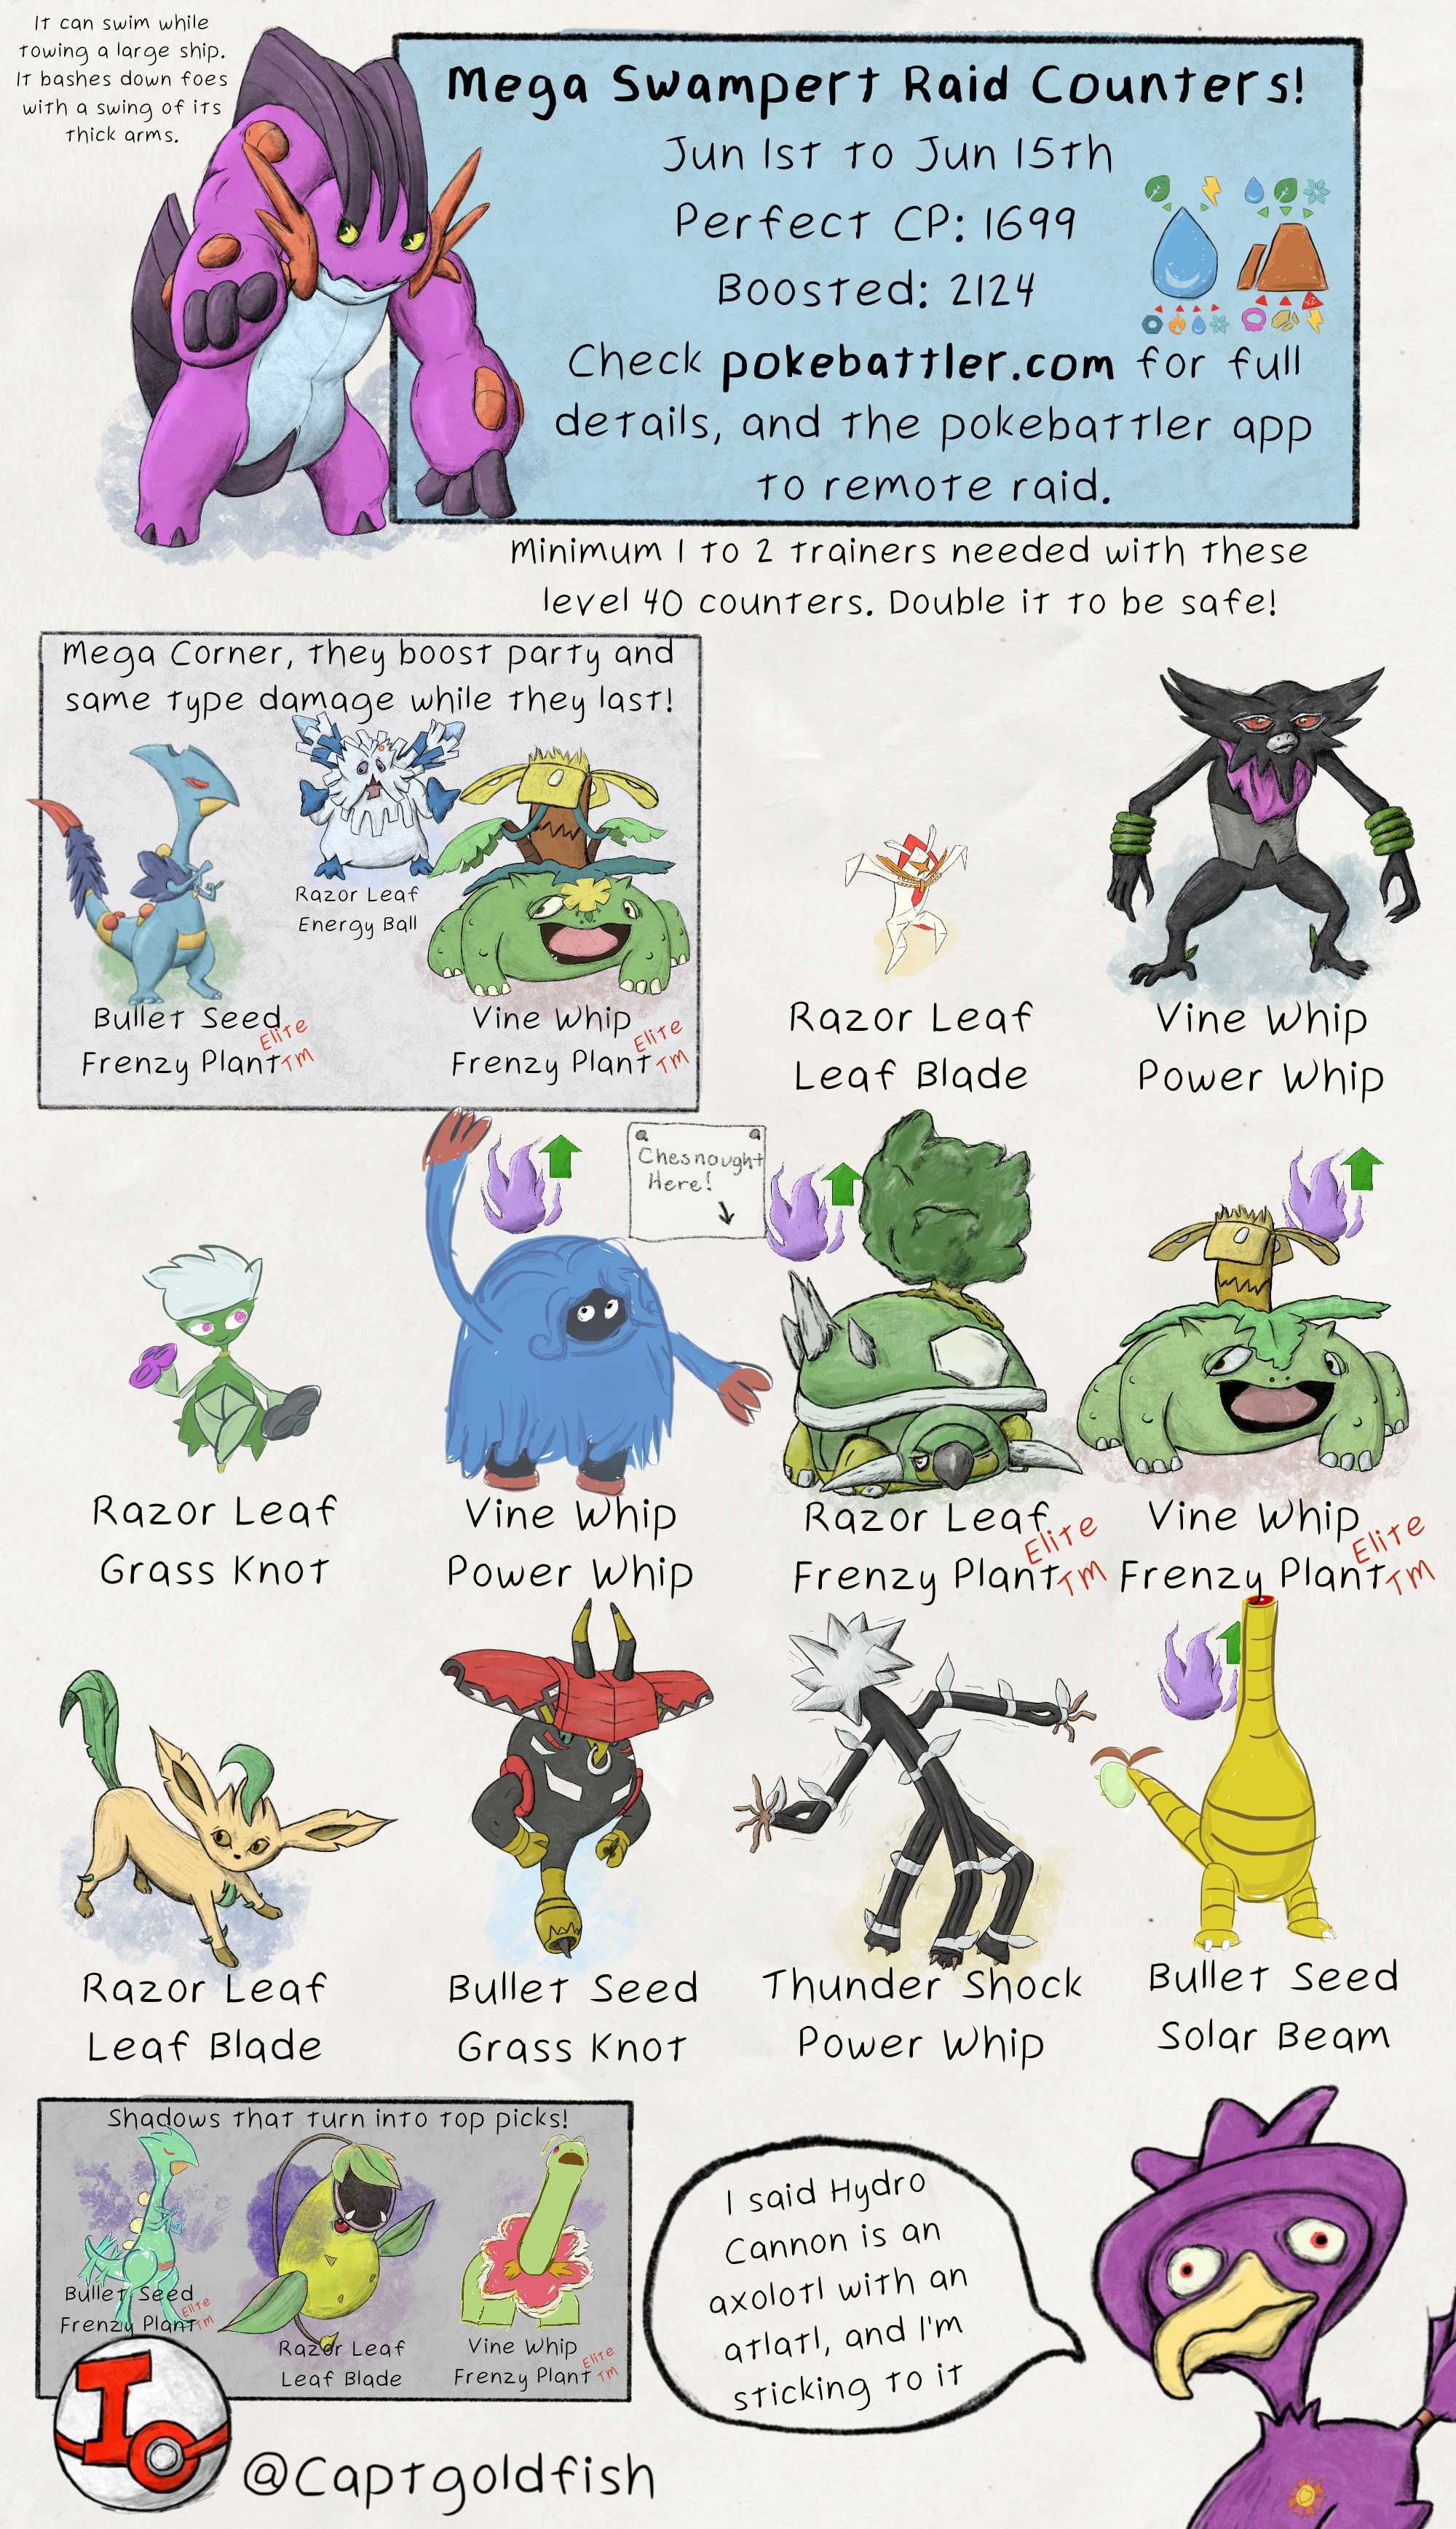 Pokémon GO: Mega Kangaskhan Raid Day Guide